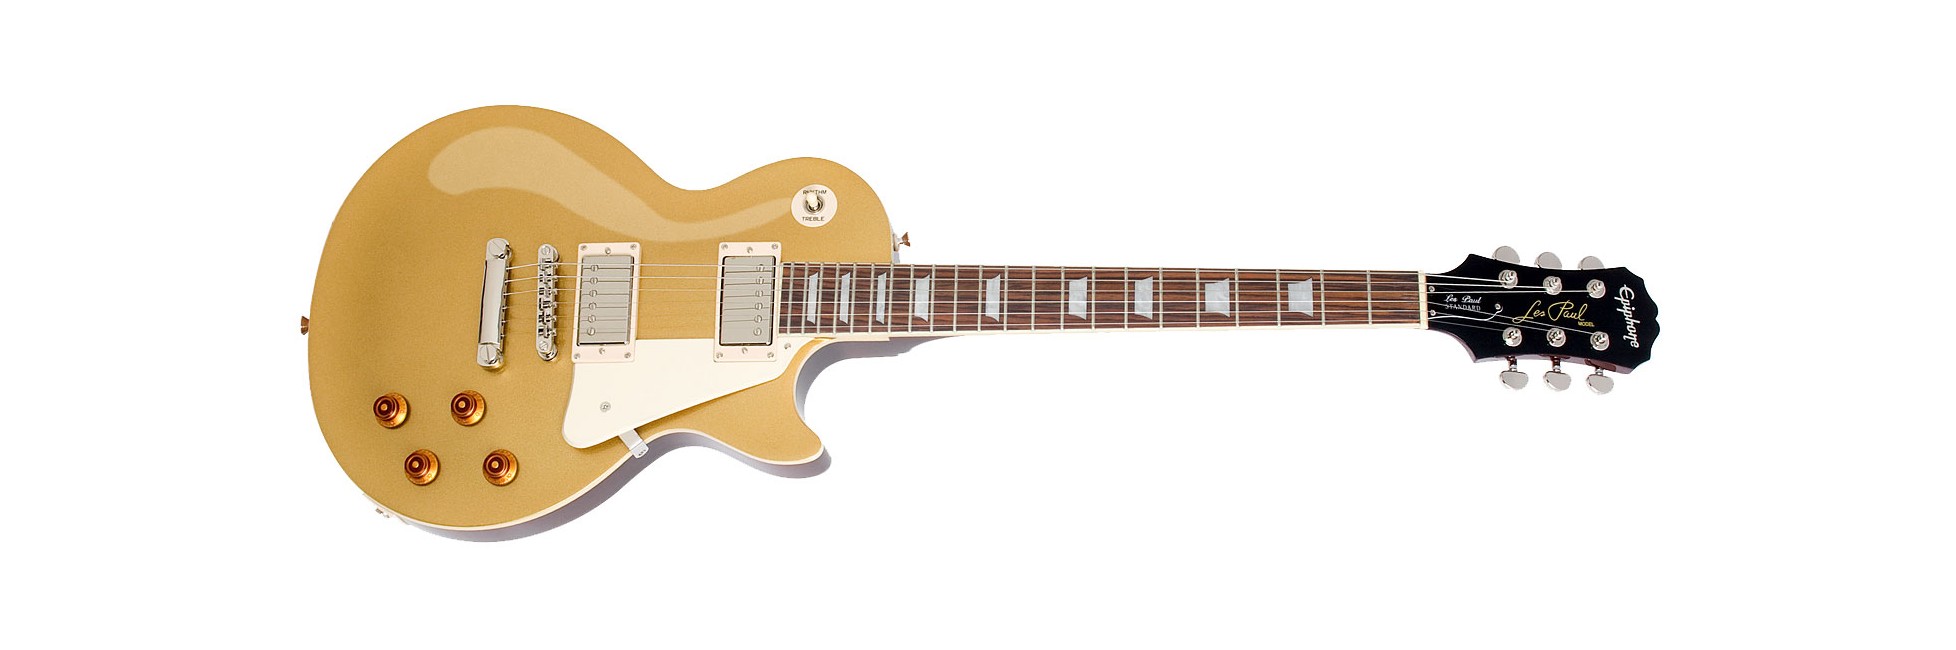 Epiphone - Les Paul Standard - Elektrisk Guitar (Metallic Gold)